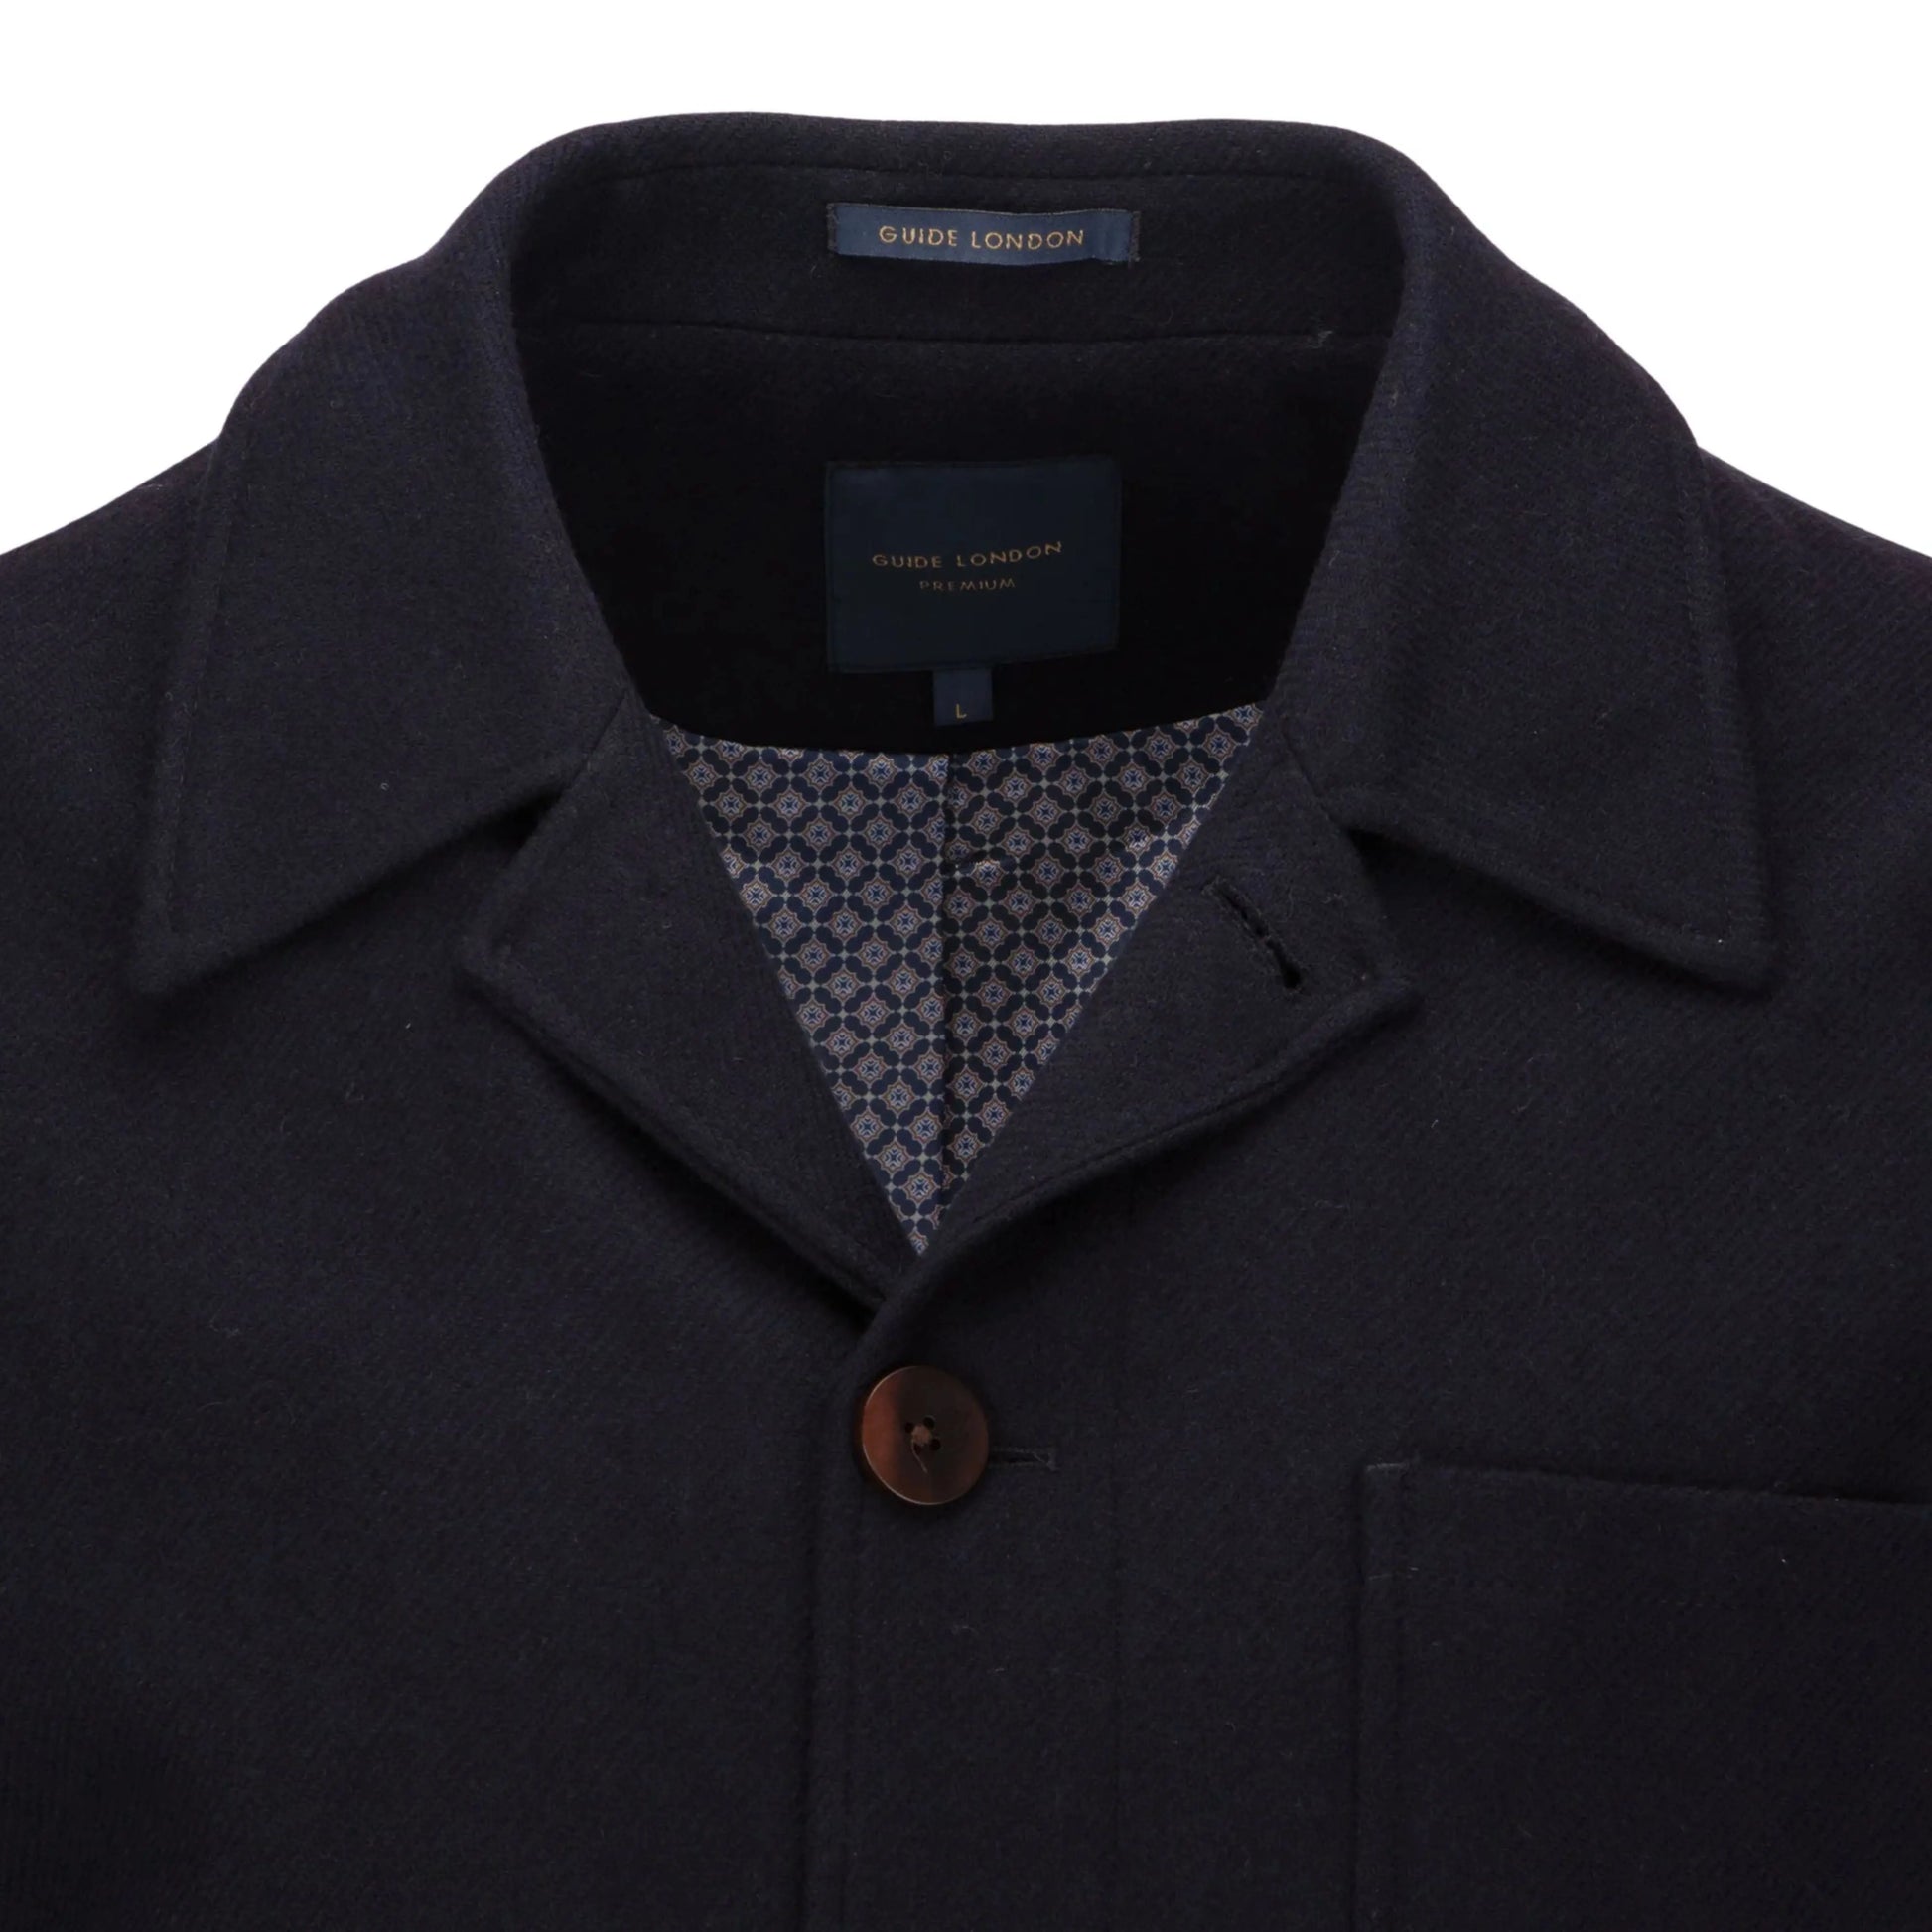 Buy Guide London Wool Overshirt Jacket - Navy | Overshirtss at Woven Durham